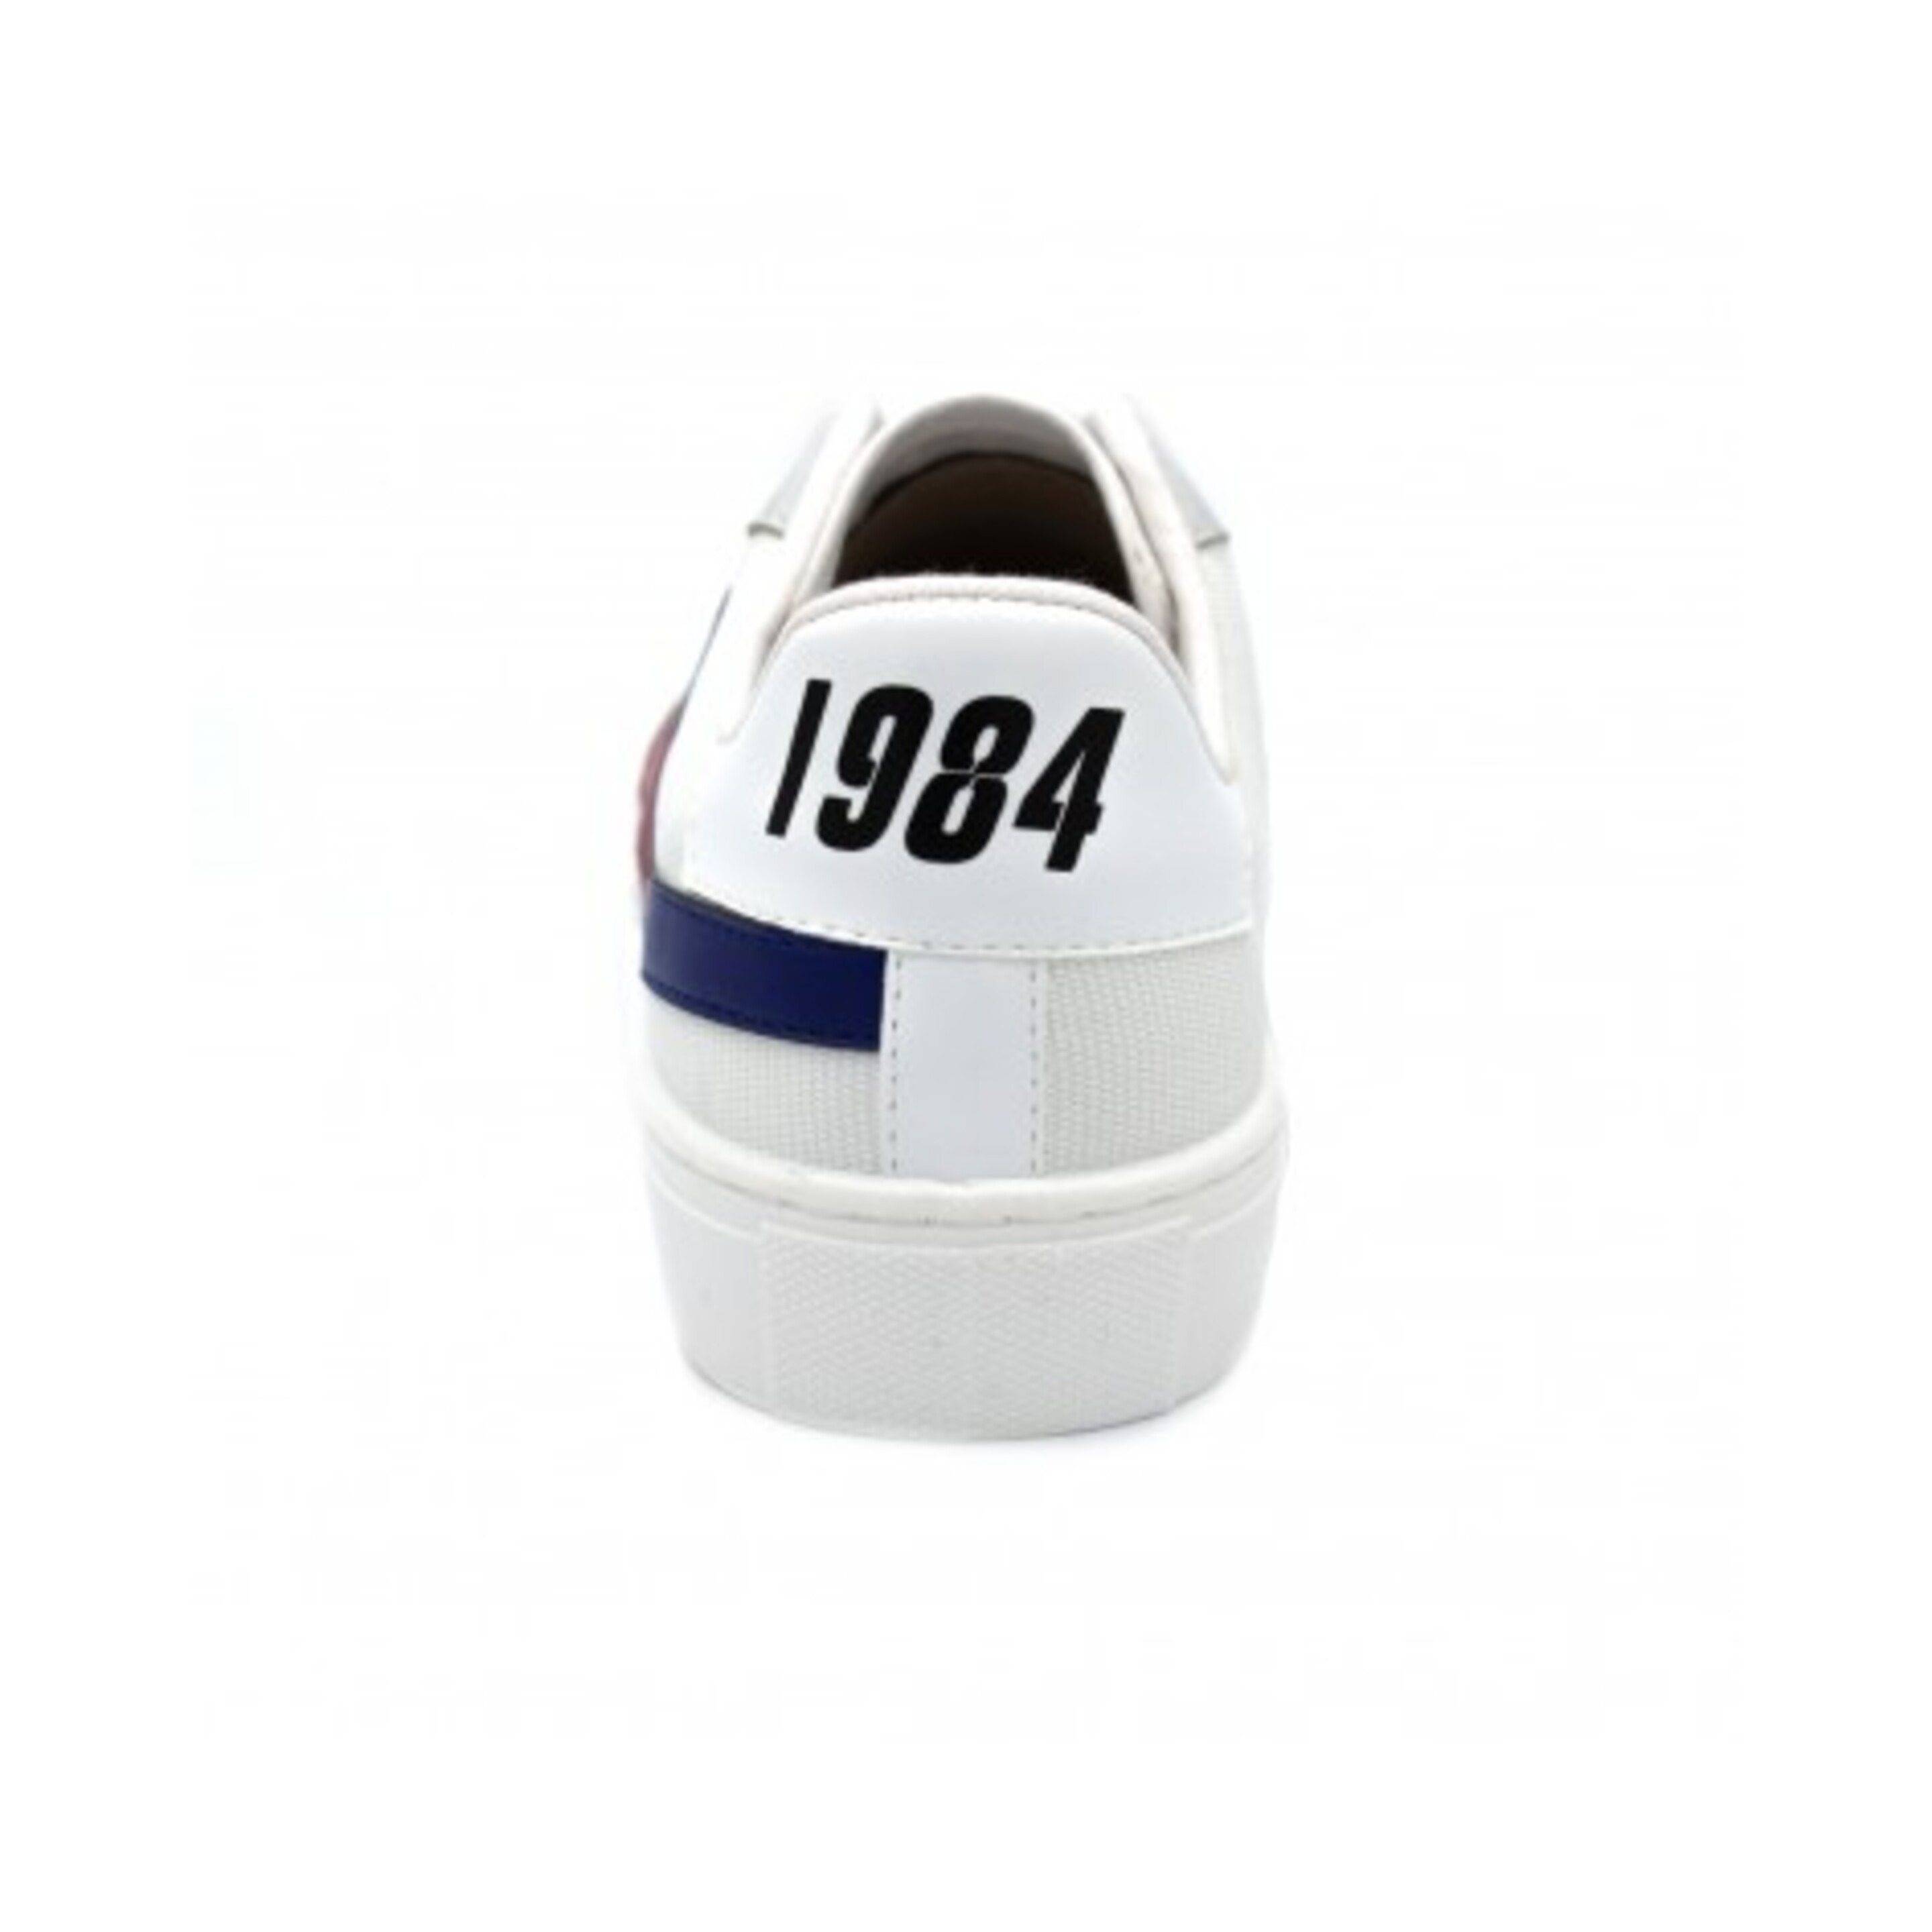 Sneaker Recykers 1984 - multicolor  MKP